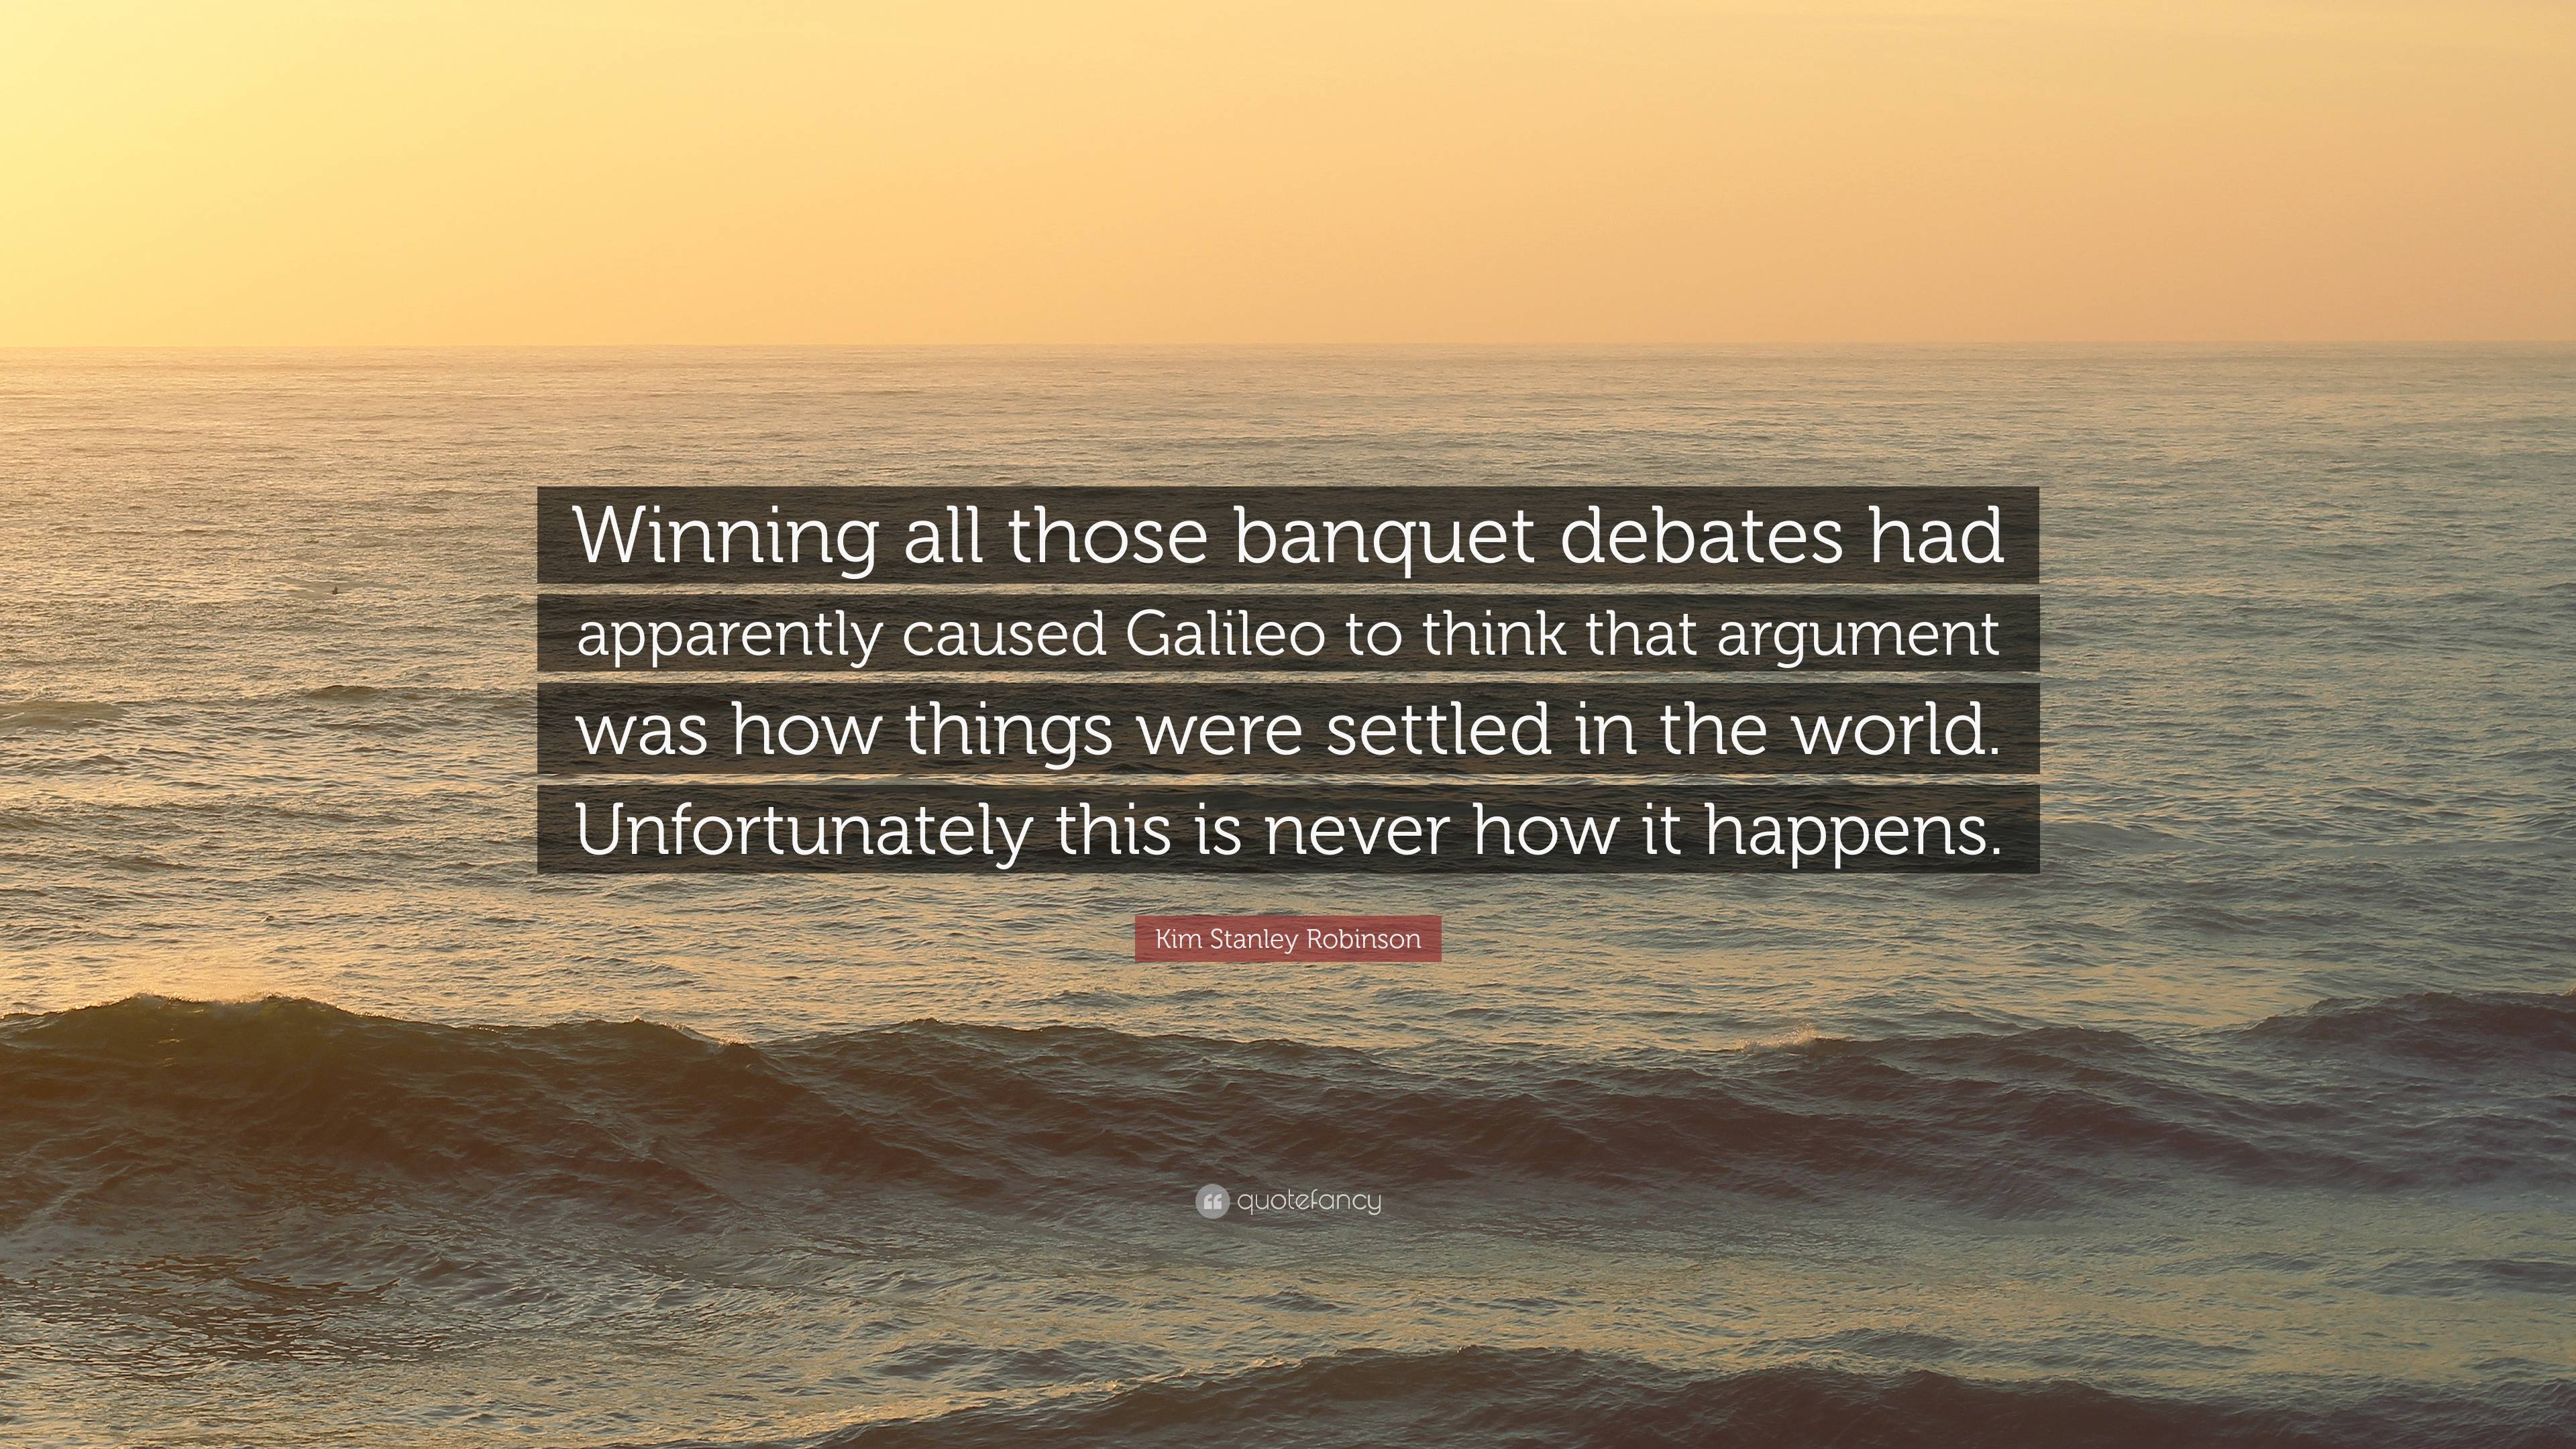 Kim Stanley Robinson Quote: “Winning all those banquet debates had ...